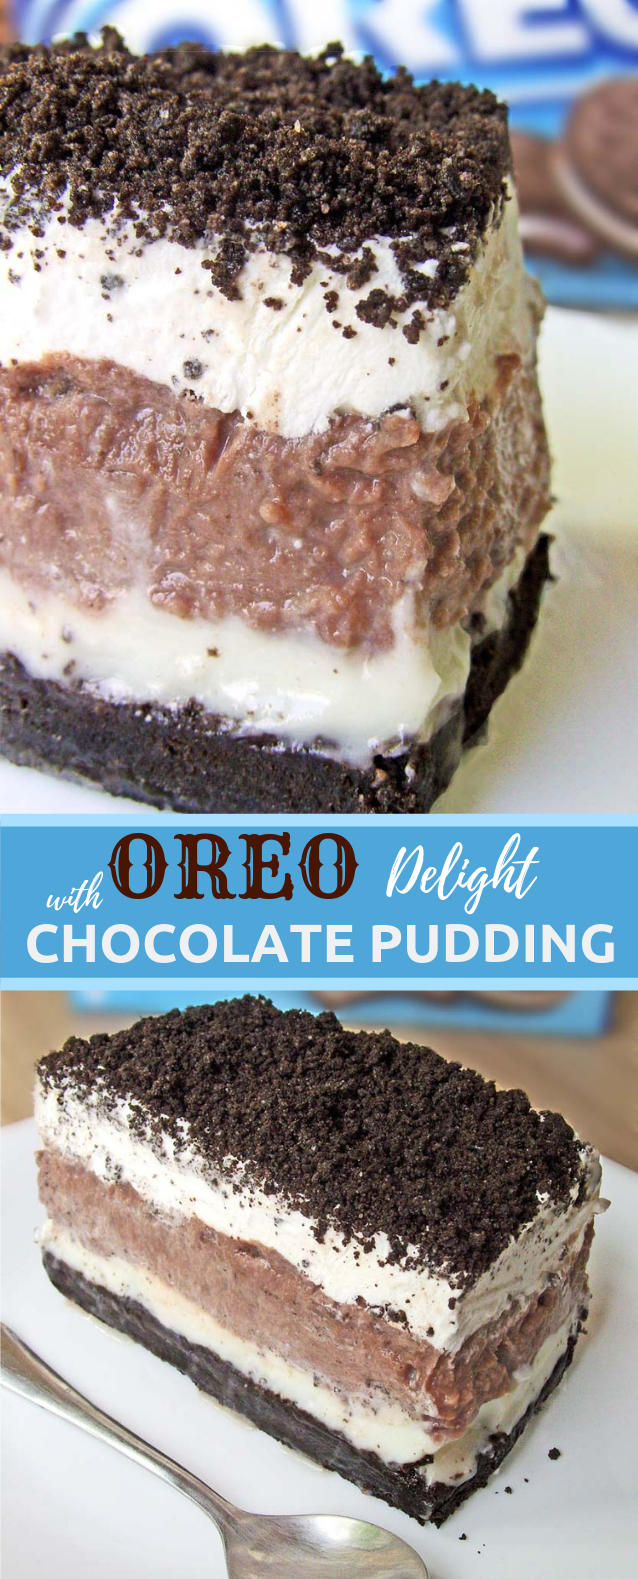 Oreo Delight with Chocolate Pudding #dessert #cake